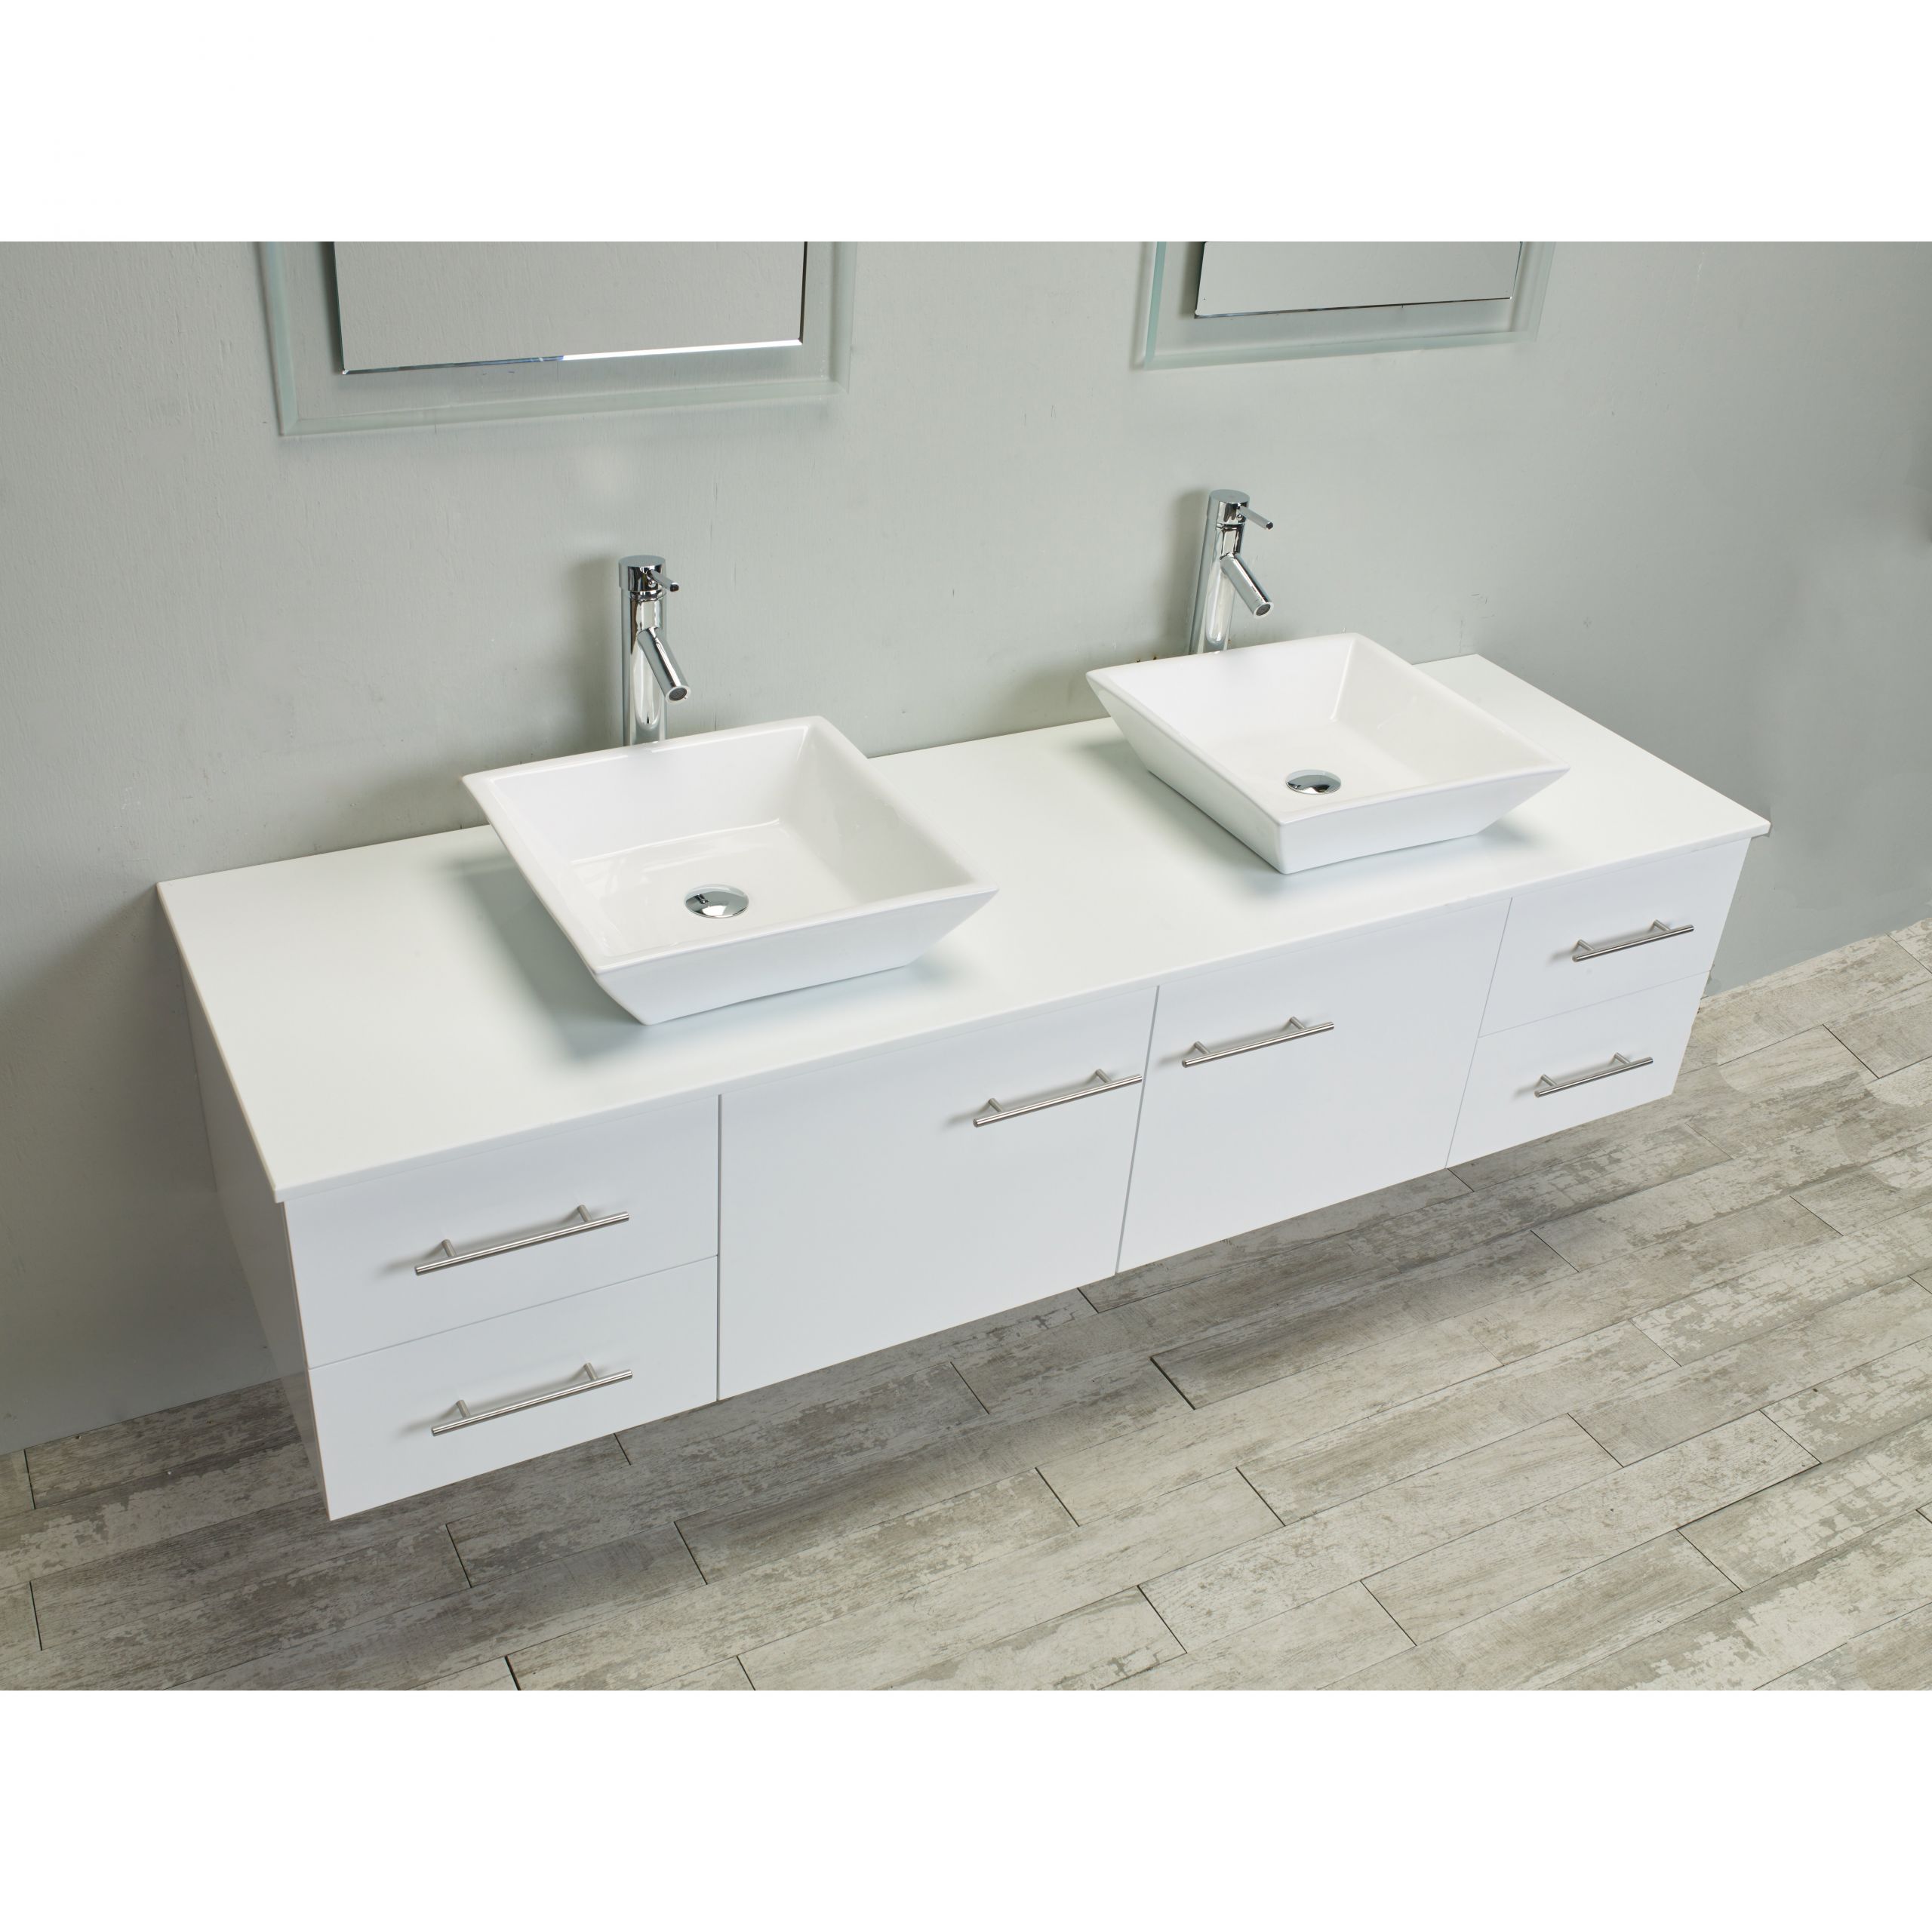 72 Double Sink Bathroom Vanity
 Eviva Totti Wave 72 Inch White Modern Double Sink Bathroom